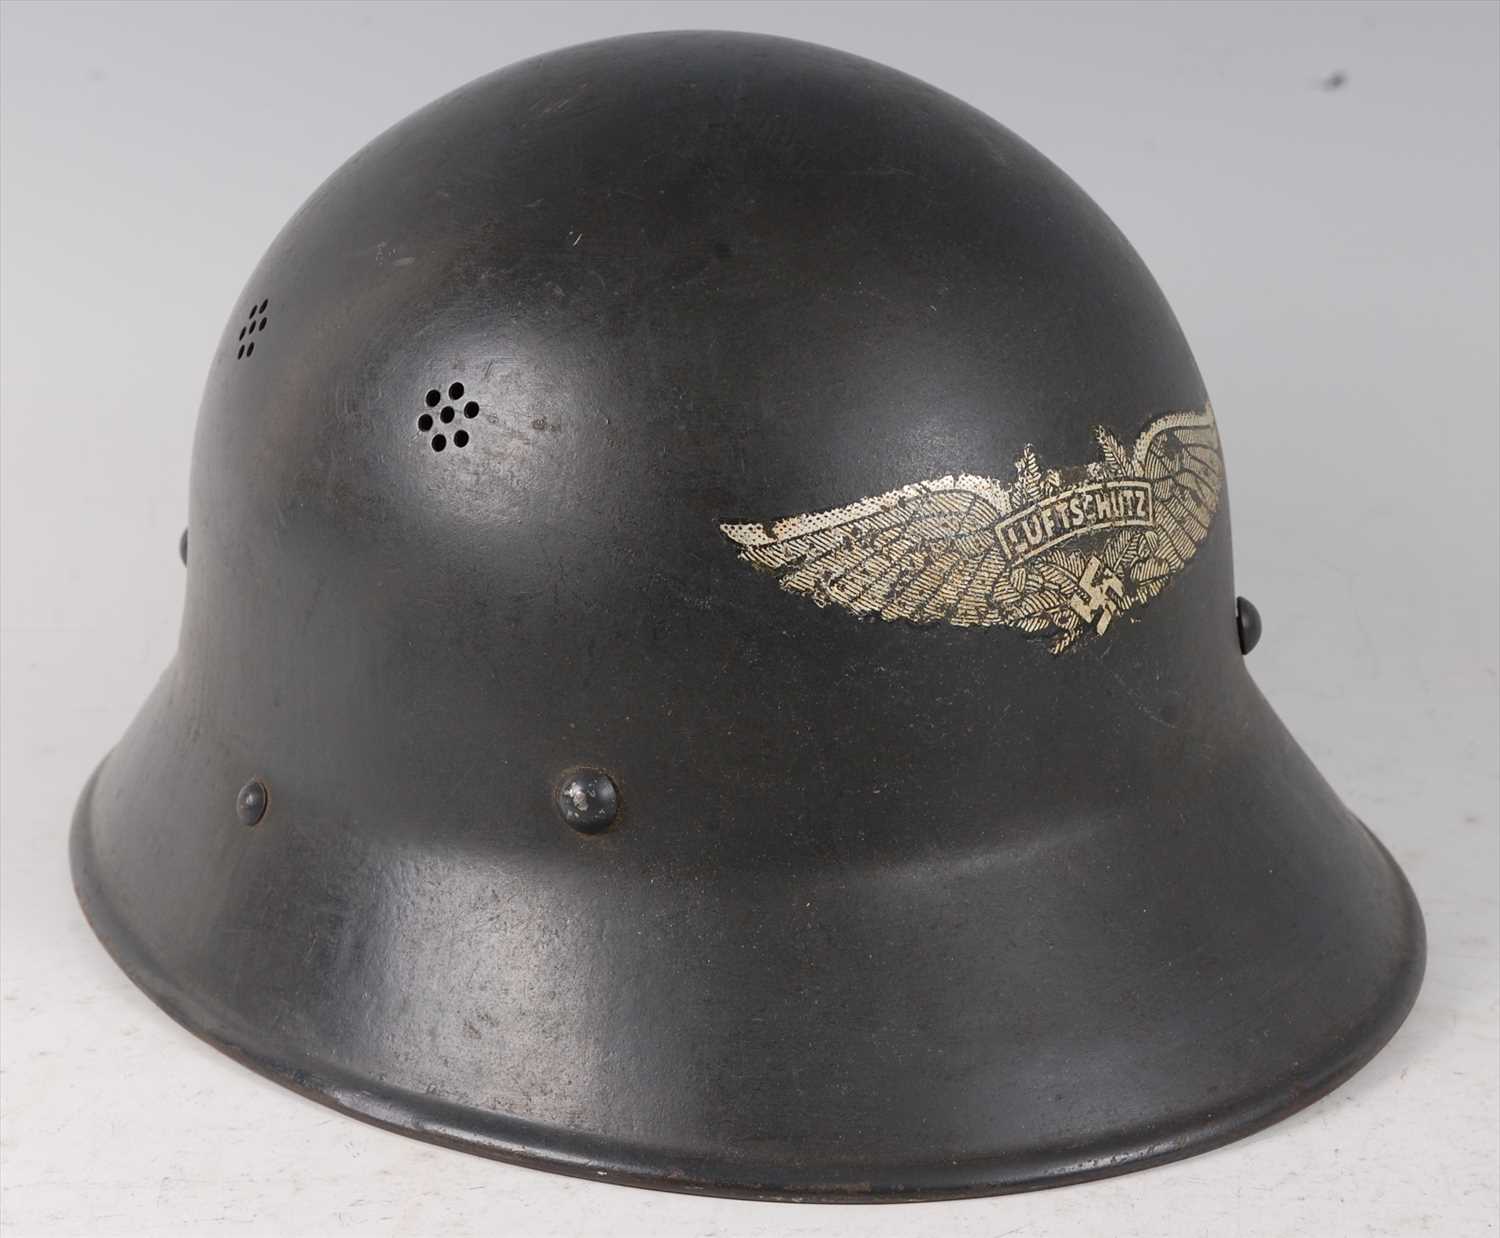 Lot 222 - A German Luftschutz Civil Defence helmet